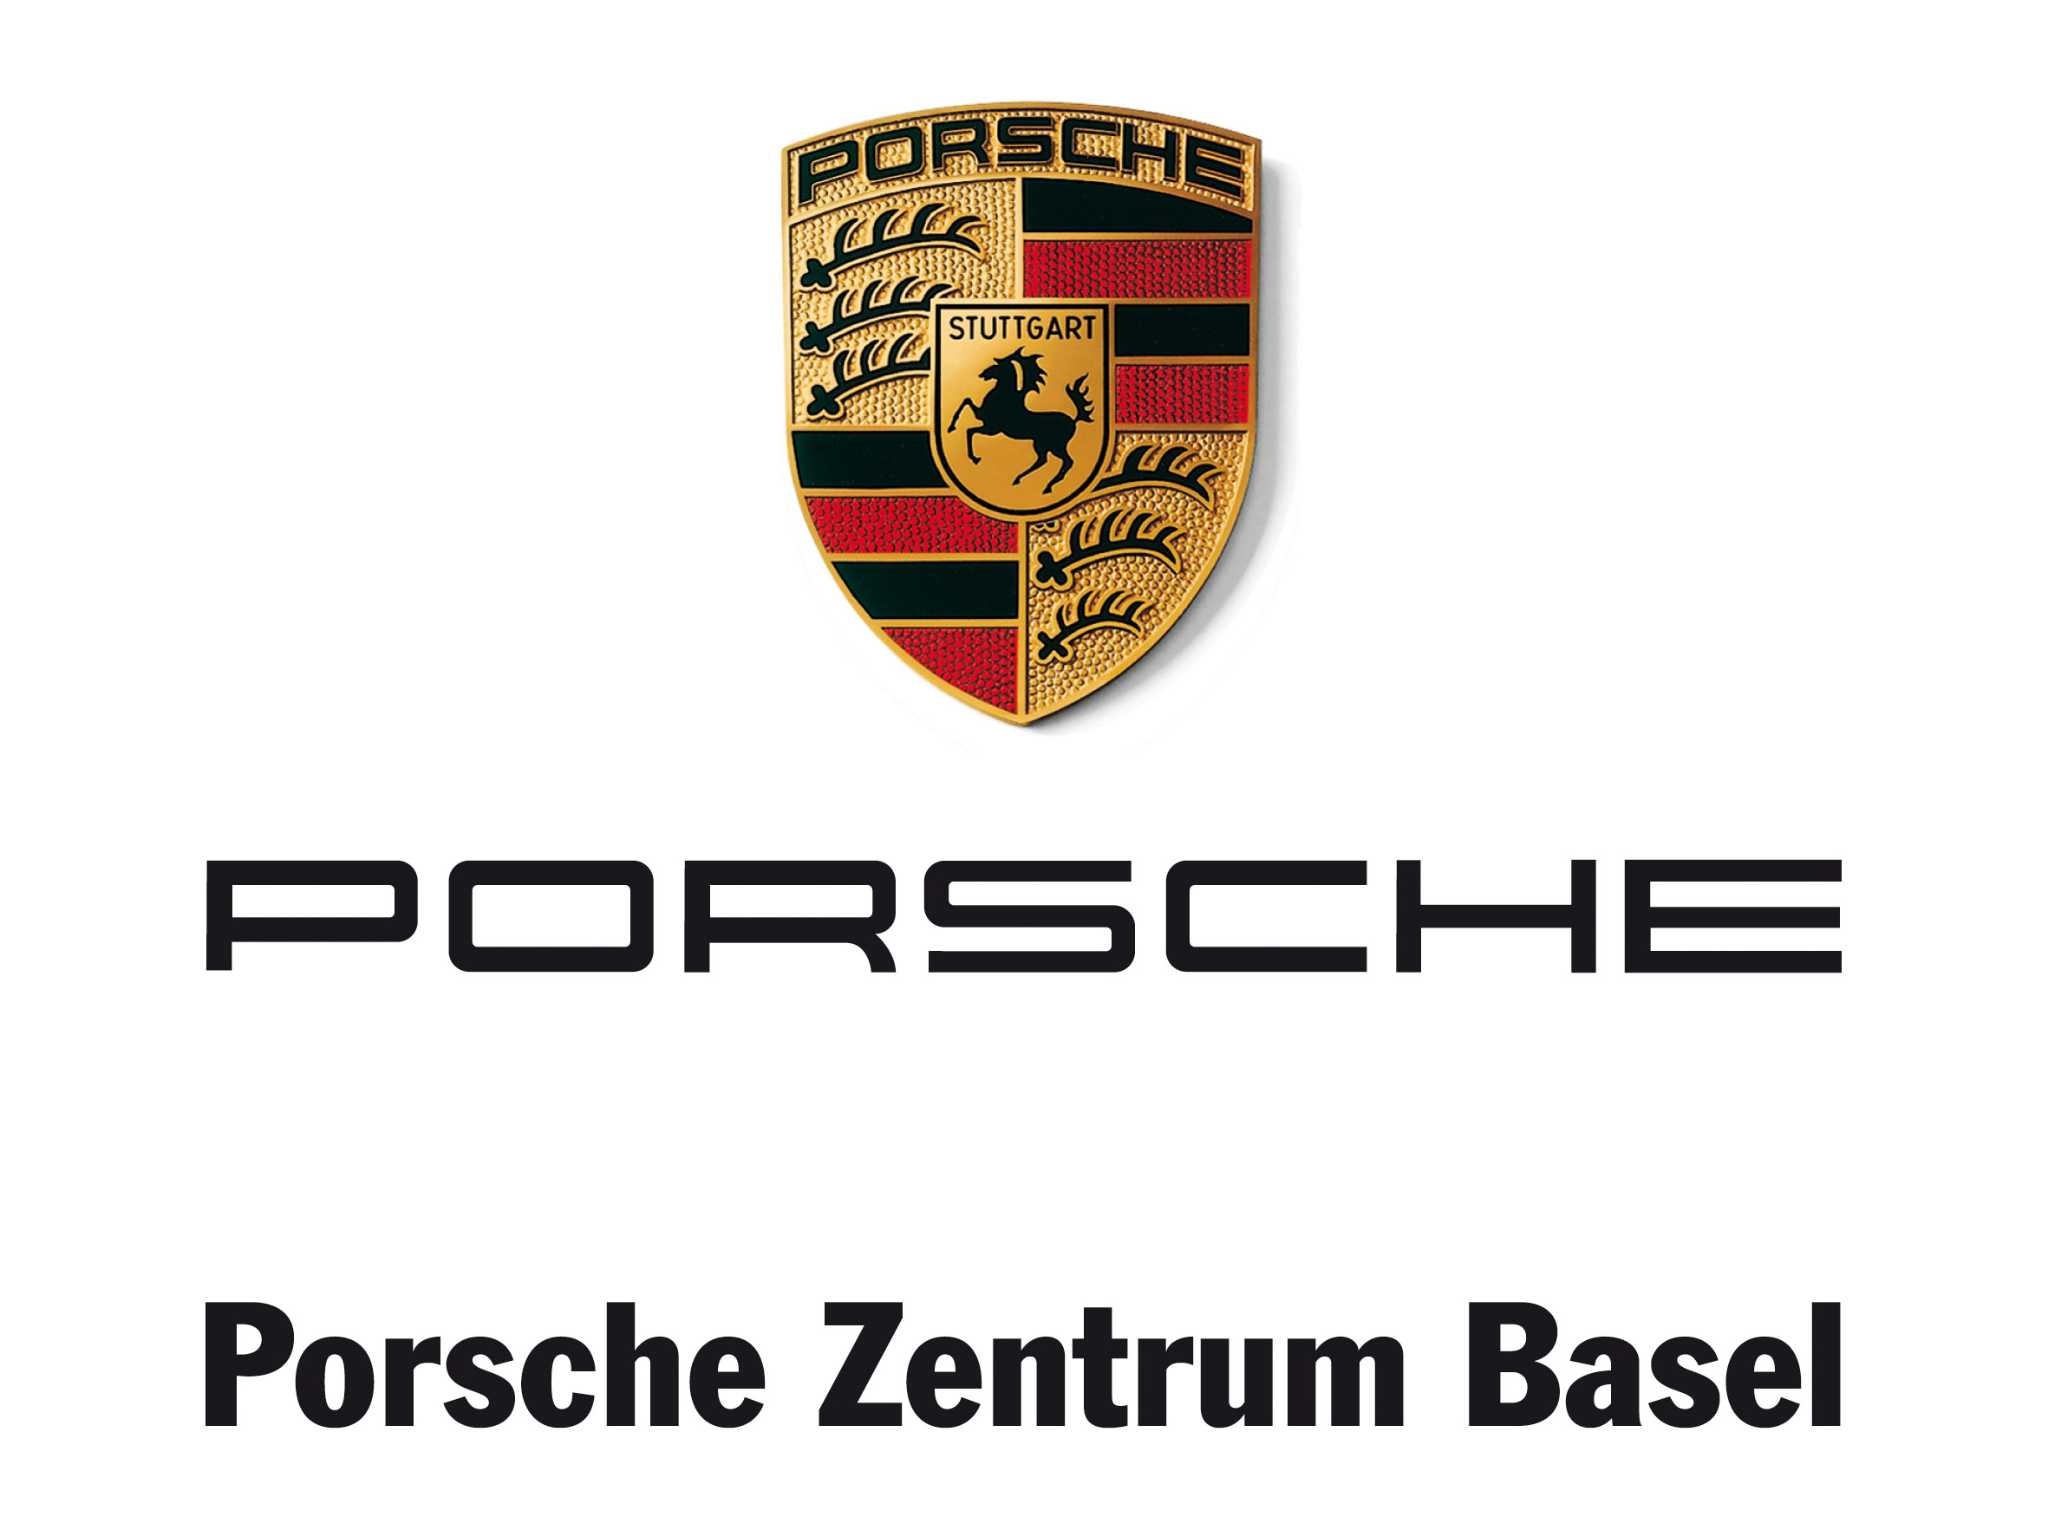 Porsche Zentrum Basel c/o Nef Sportwagen AG